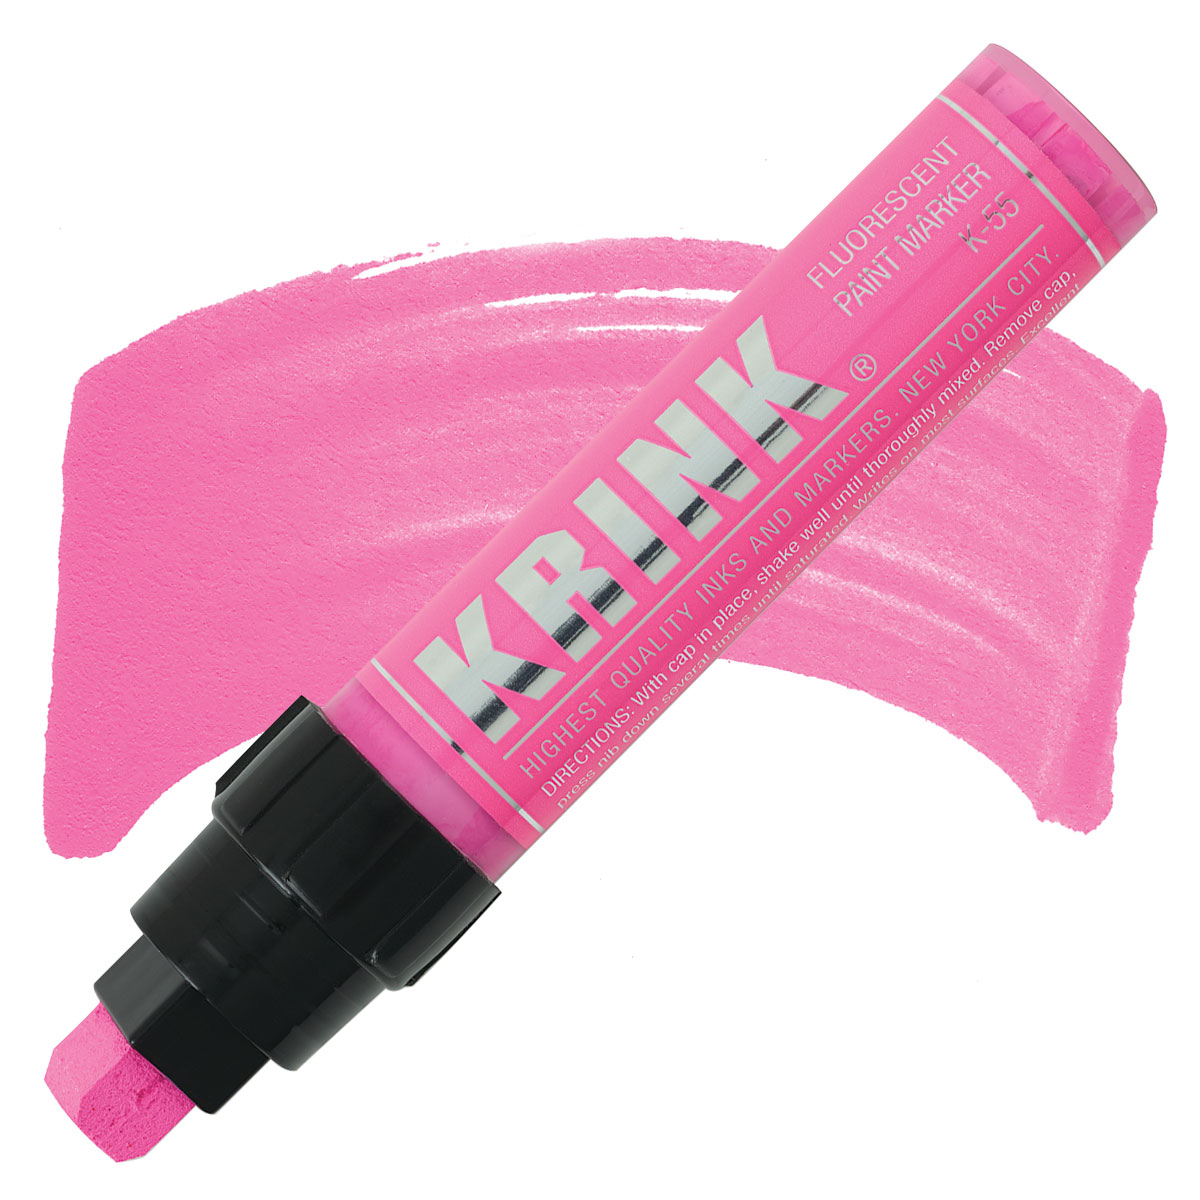 Buy K-55 Paint Marker 3-Pack| Krink